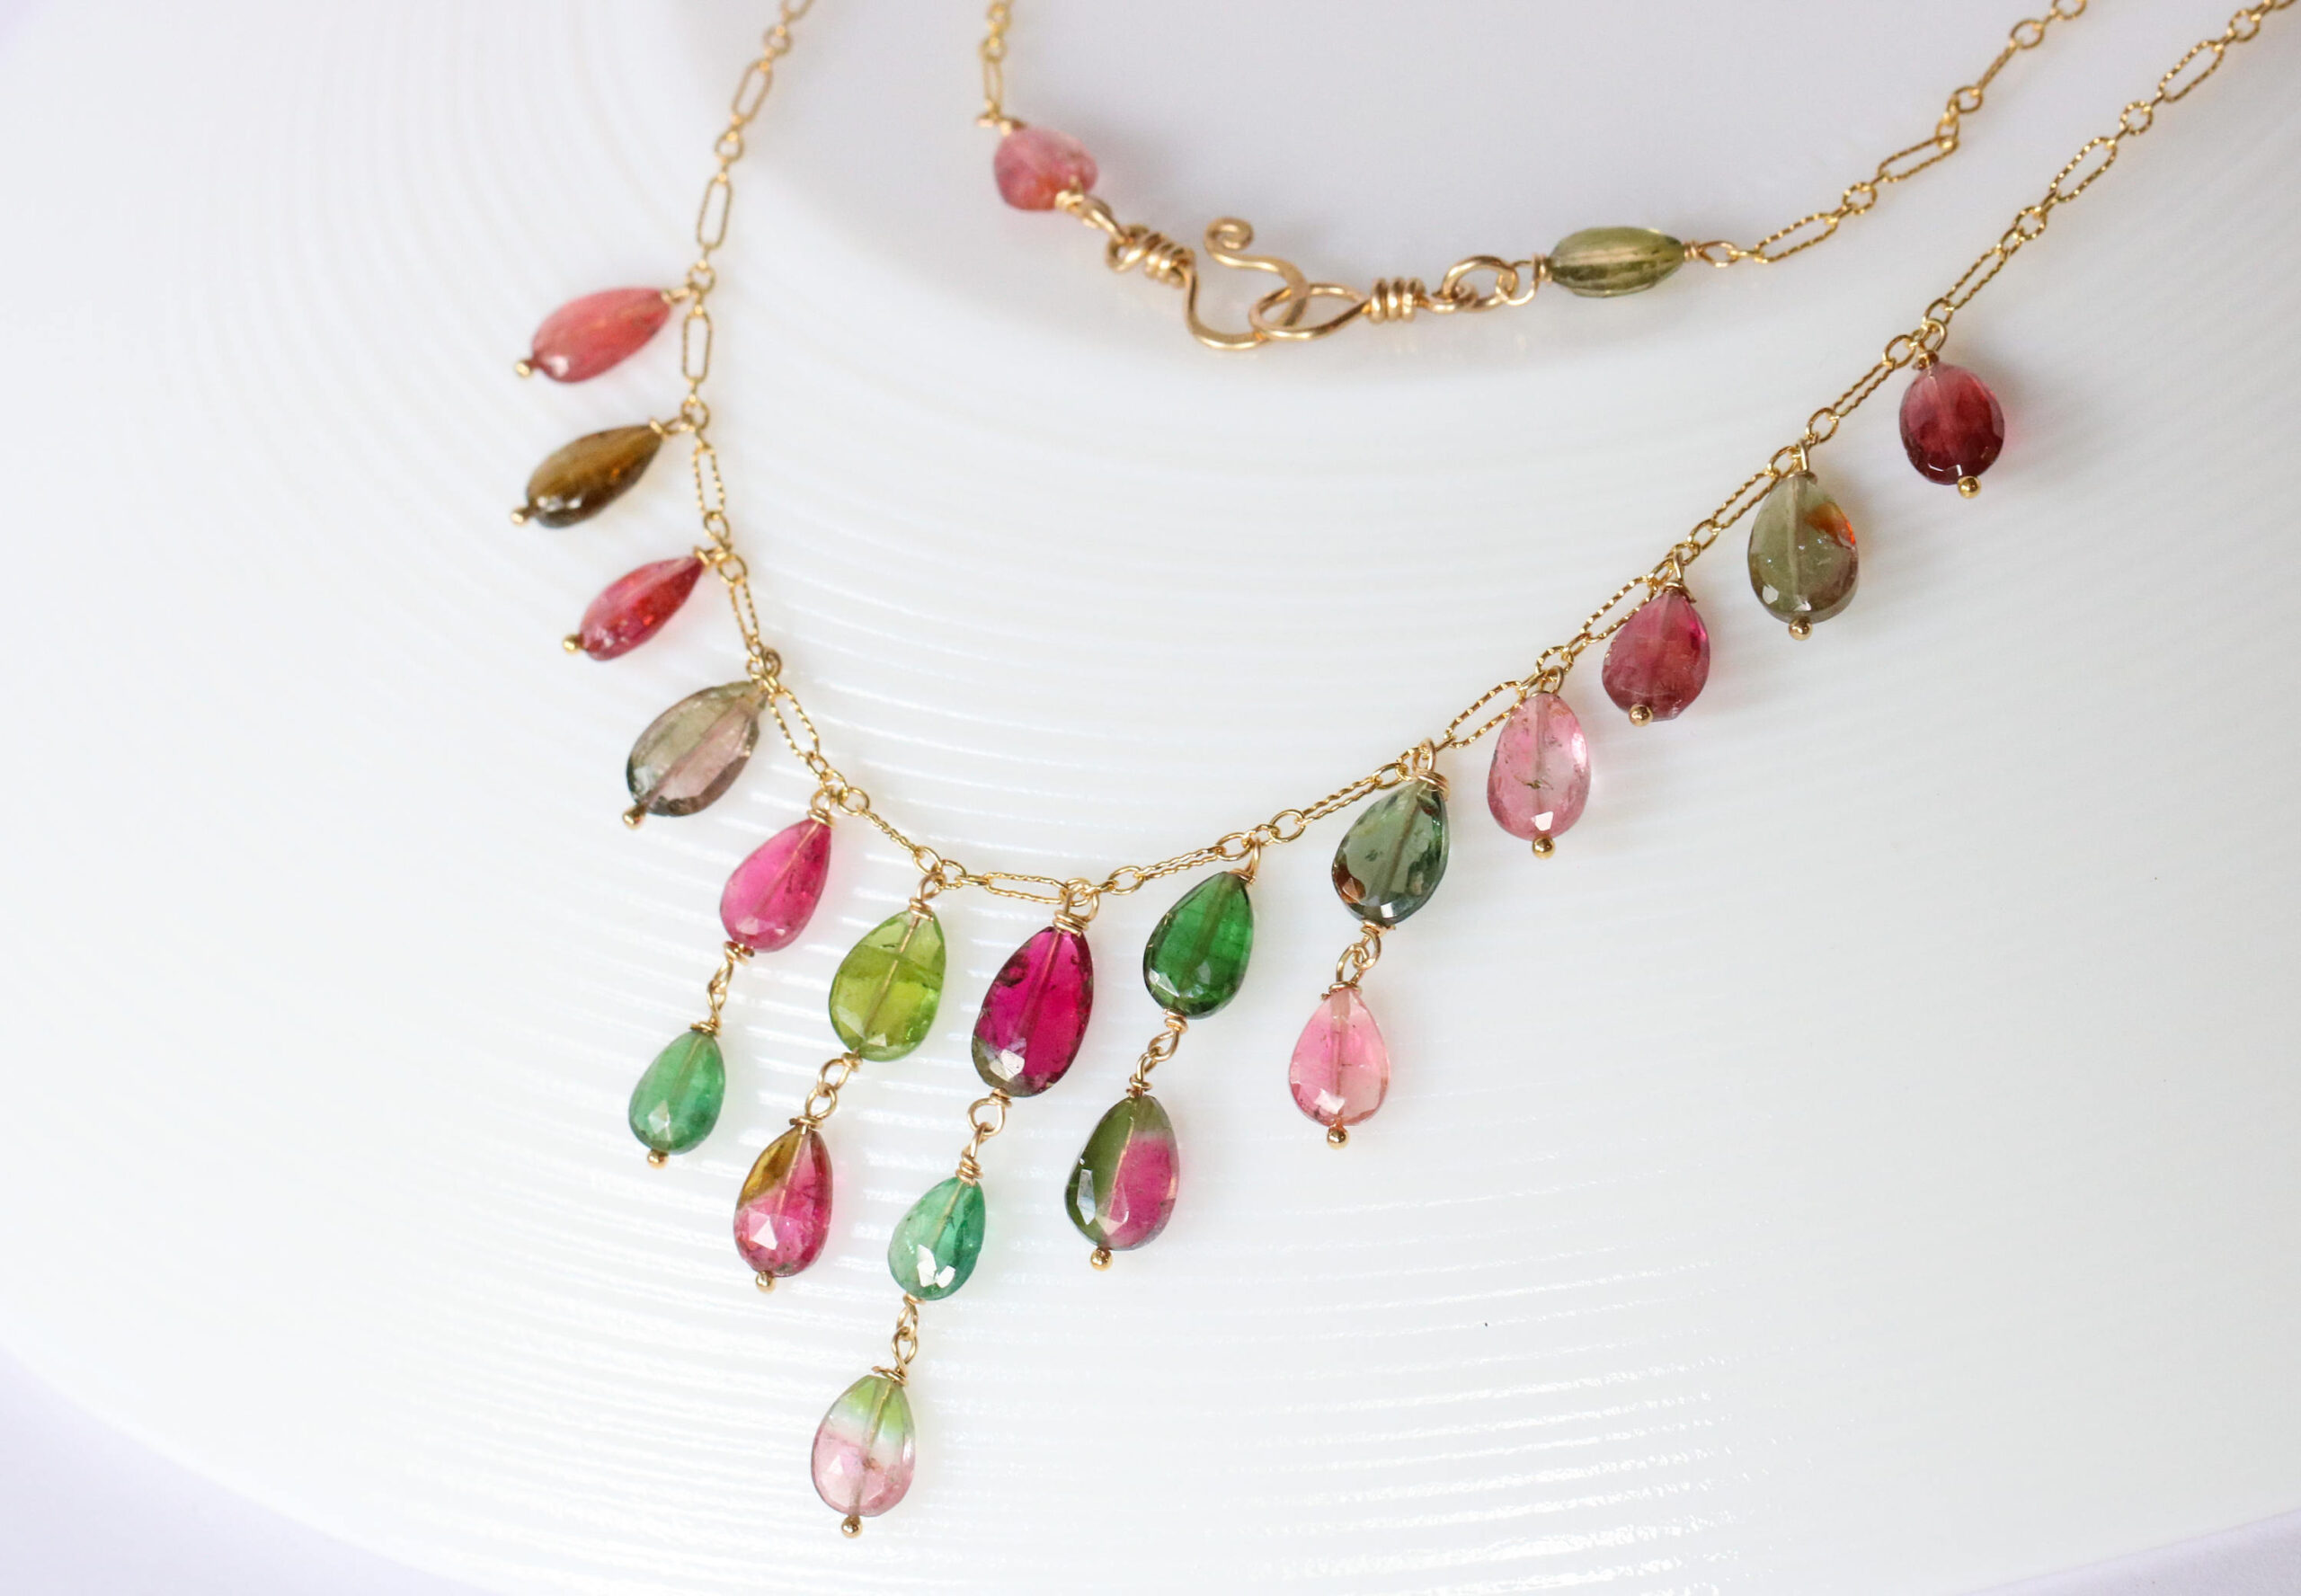 Luxury Watermelon Tourmaline Statement Bib Necklace and Earrings Jewelry Set